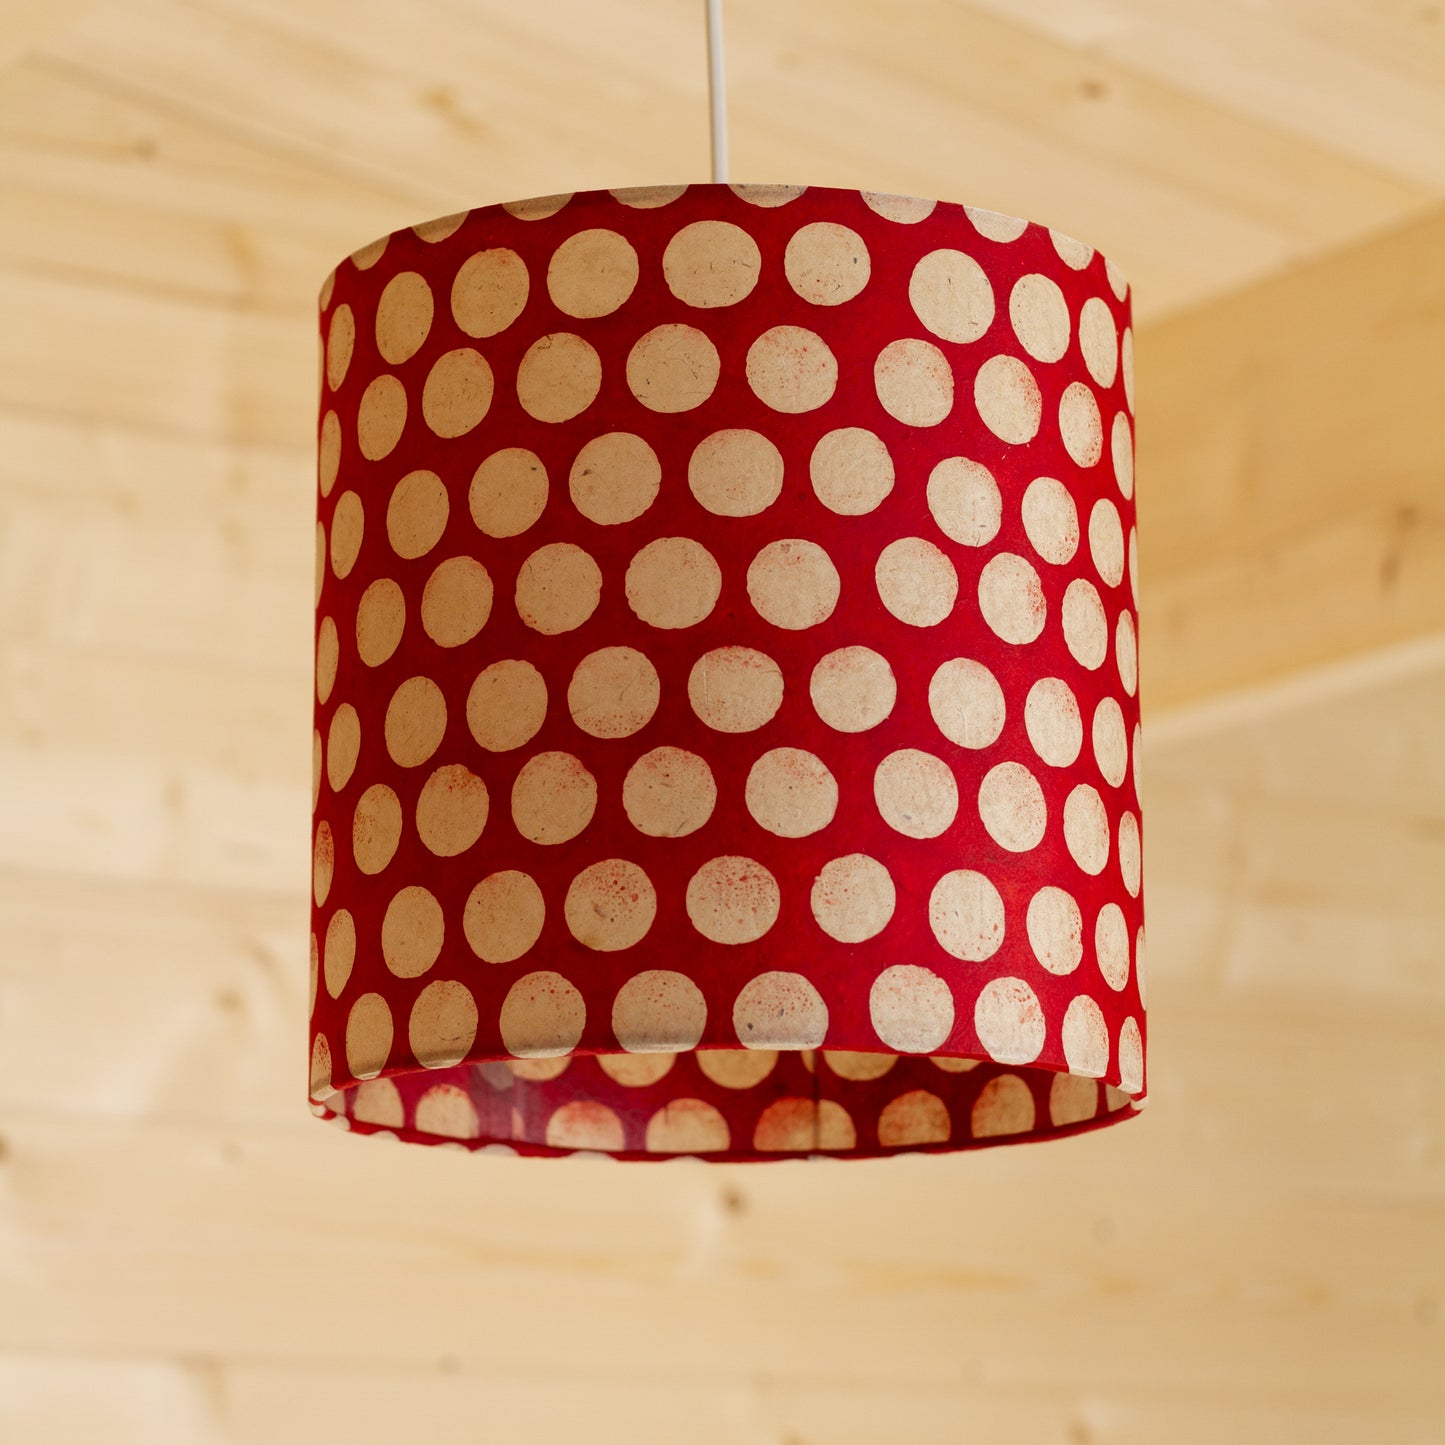 Drum Lamp Shade - P84 - Batik Dots on Red, 25cm x 25cm